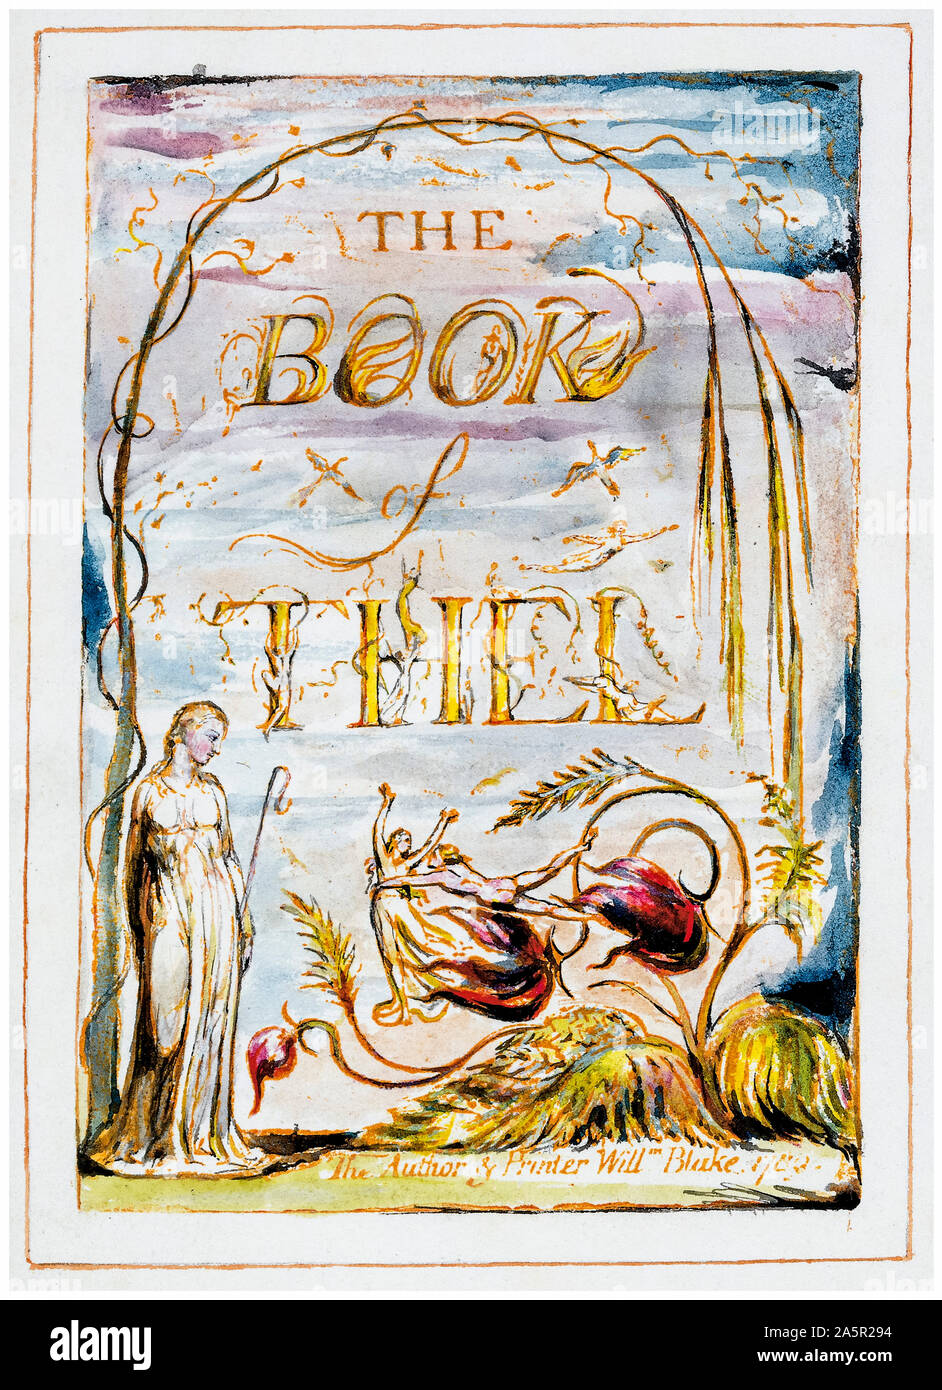 William Blake, The Book of Thel, (frontispiece), stylo et encre à aquarelle, illustration, 1789 Banque D'Images